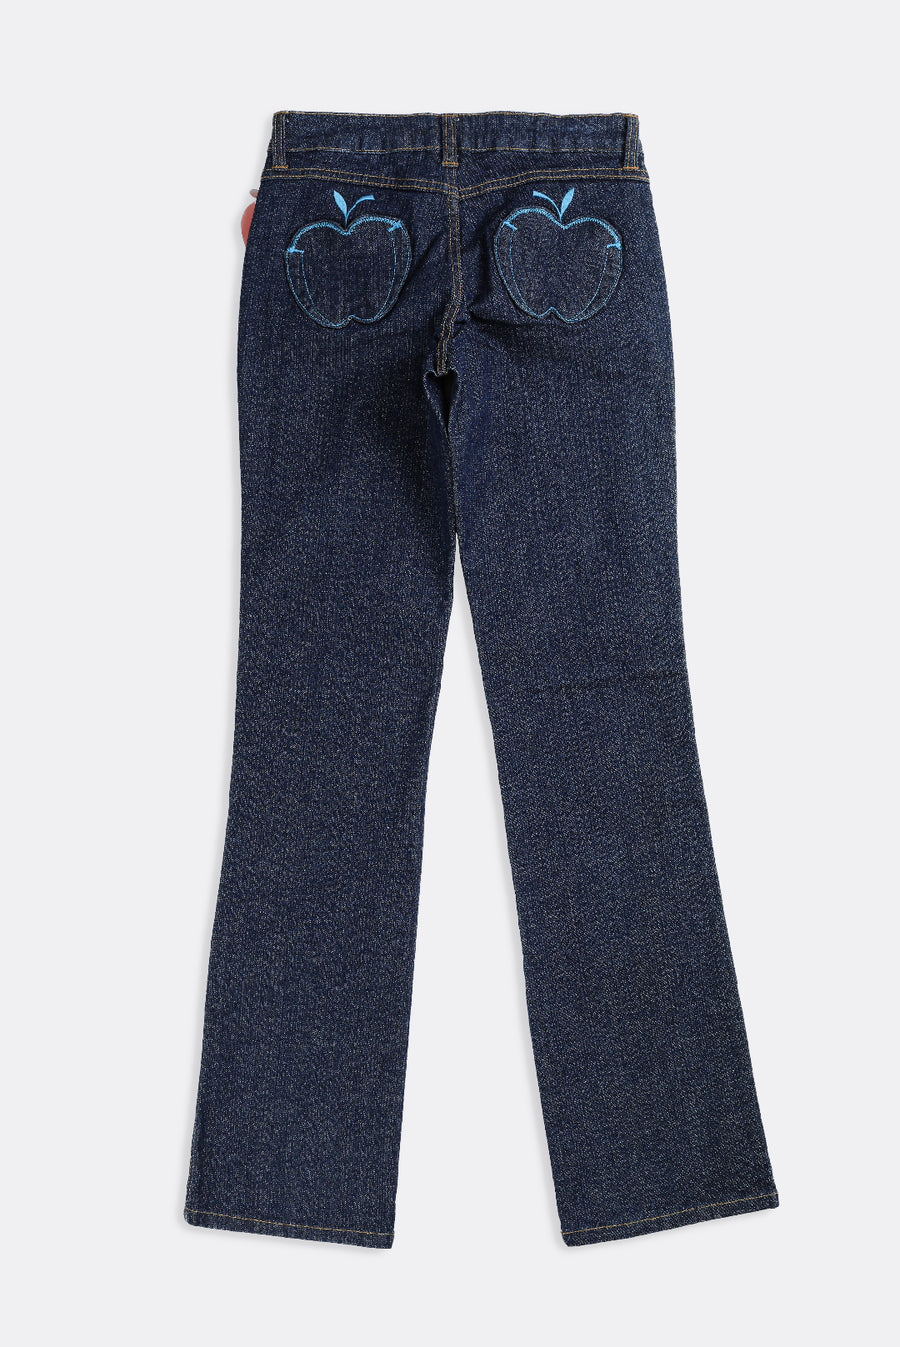 Apple Bottom Jeans Vintage Trousers Blue Denim Embroidered